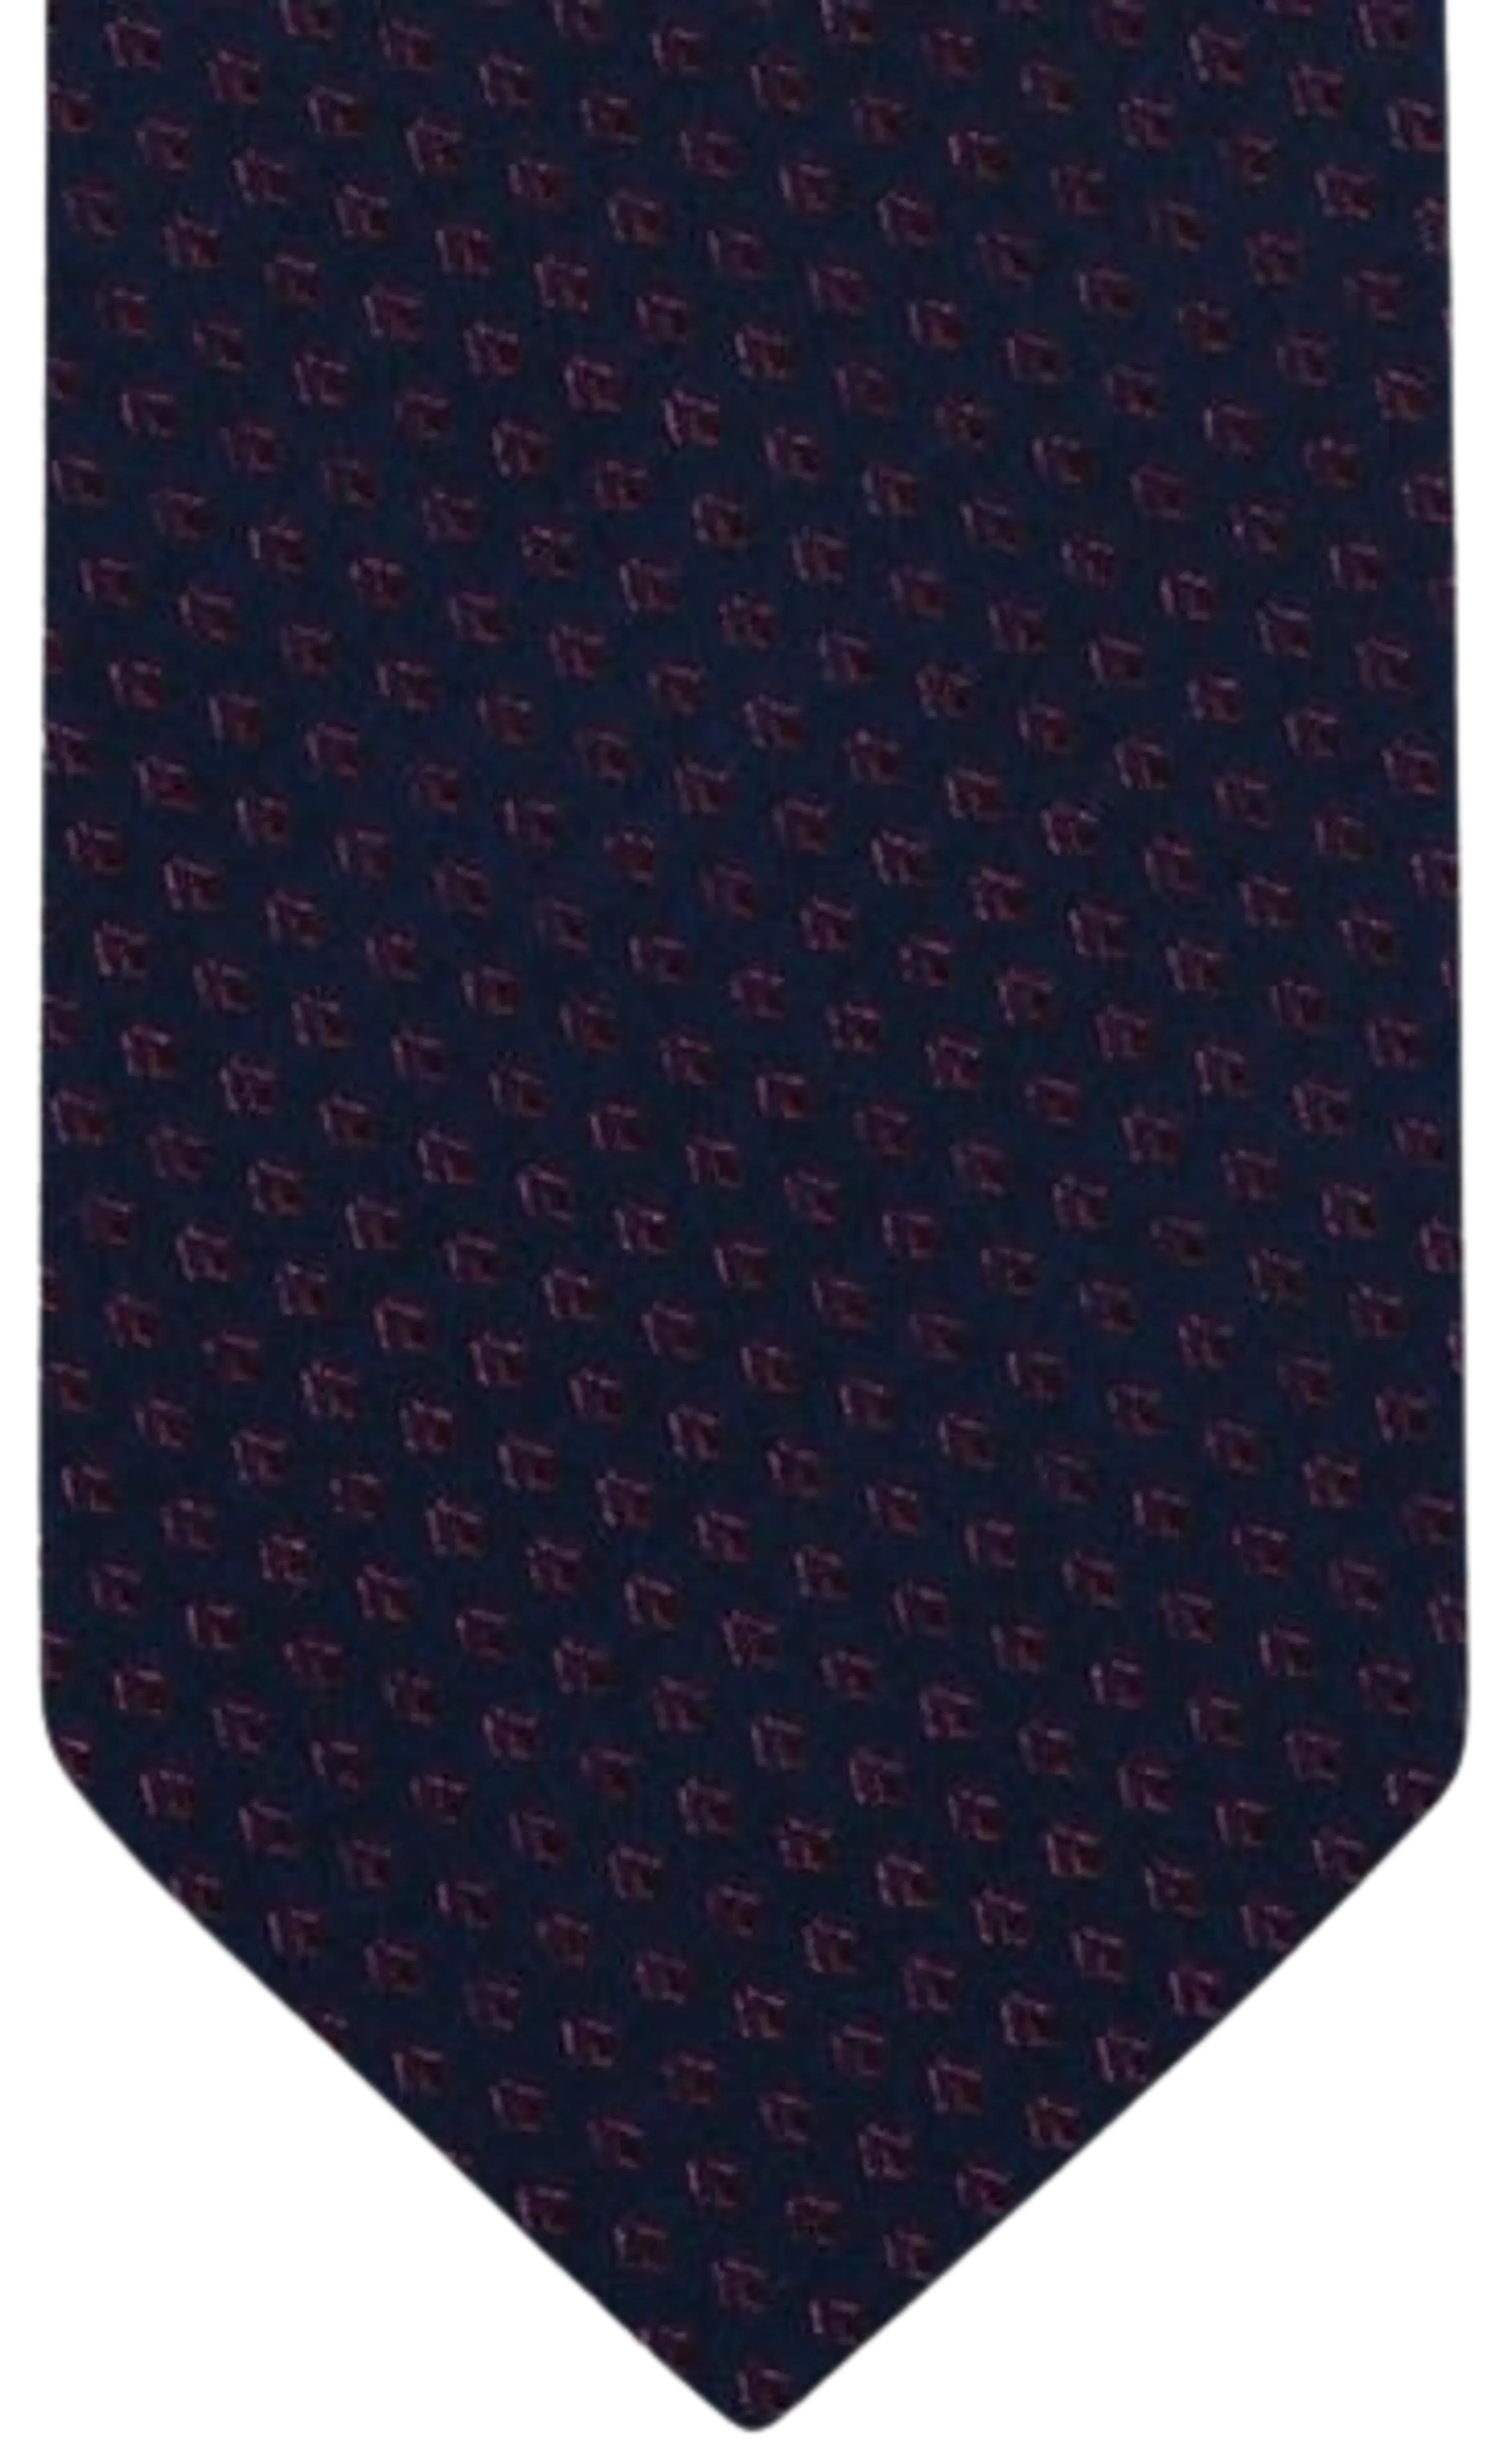 Olymp solmio